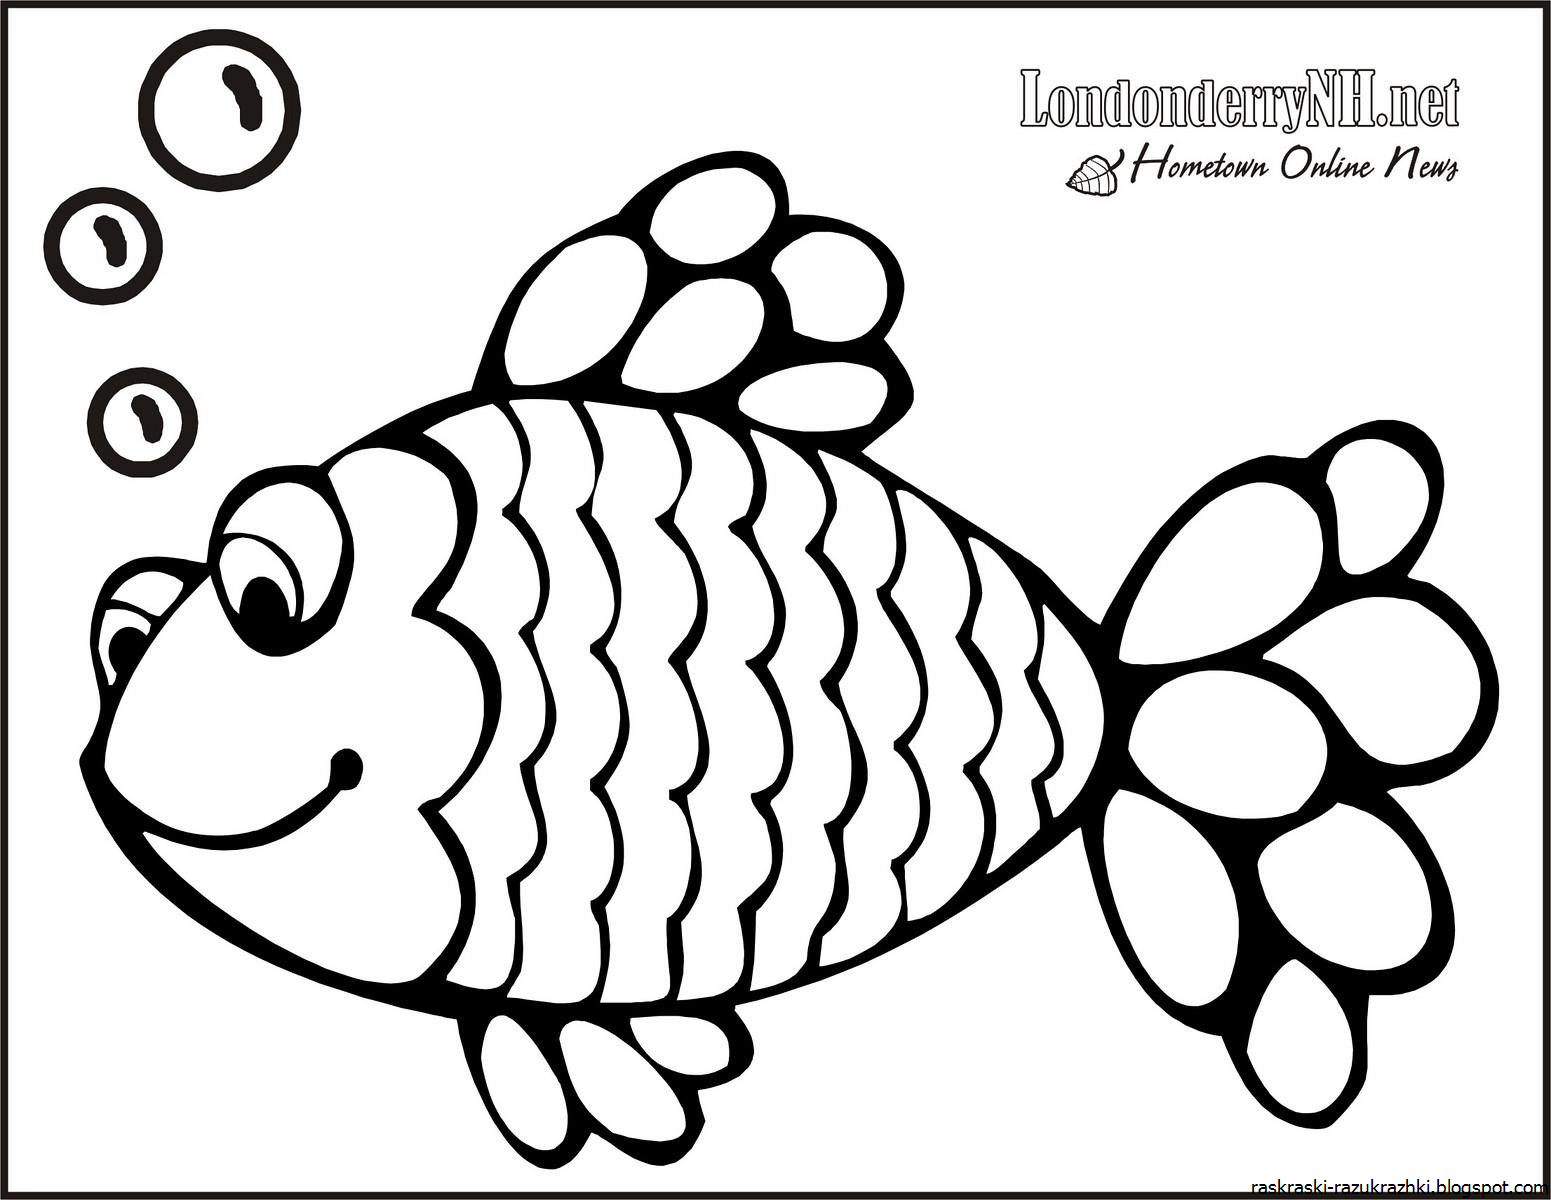 Раскраски рыбки для детей 3 4 лет. Рыбка раскраска для детей. Рыба раскраска для детей. Рыбка для раскрашивания для детей. Рыбка картинка для детей раскраска.